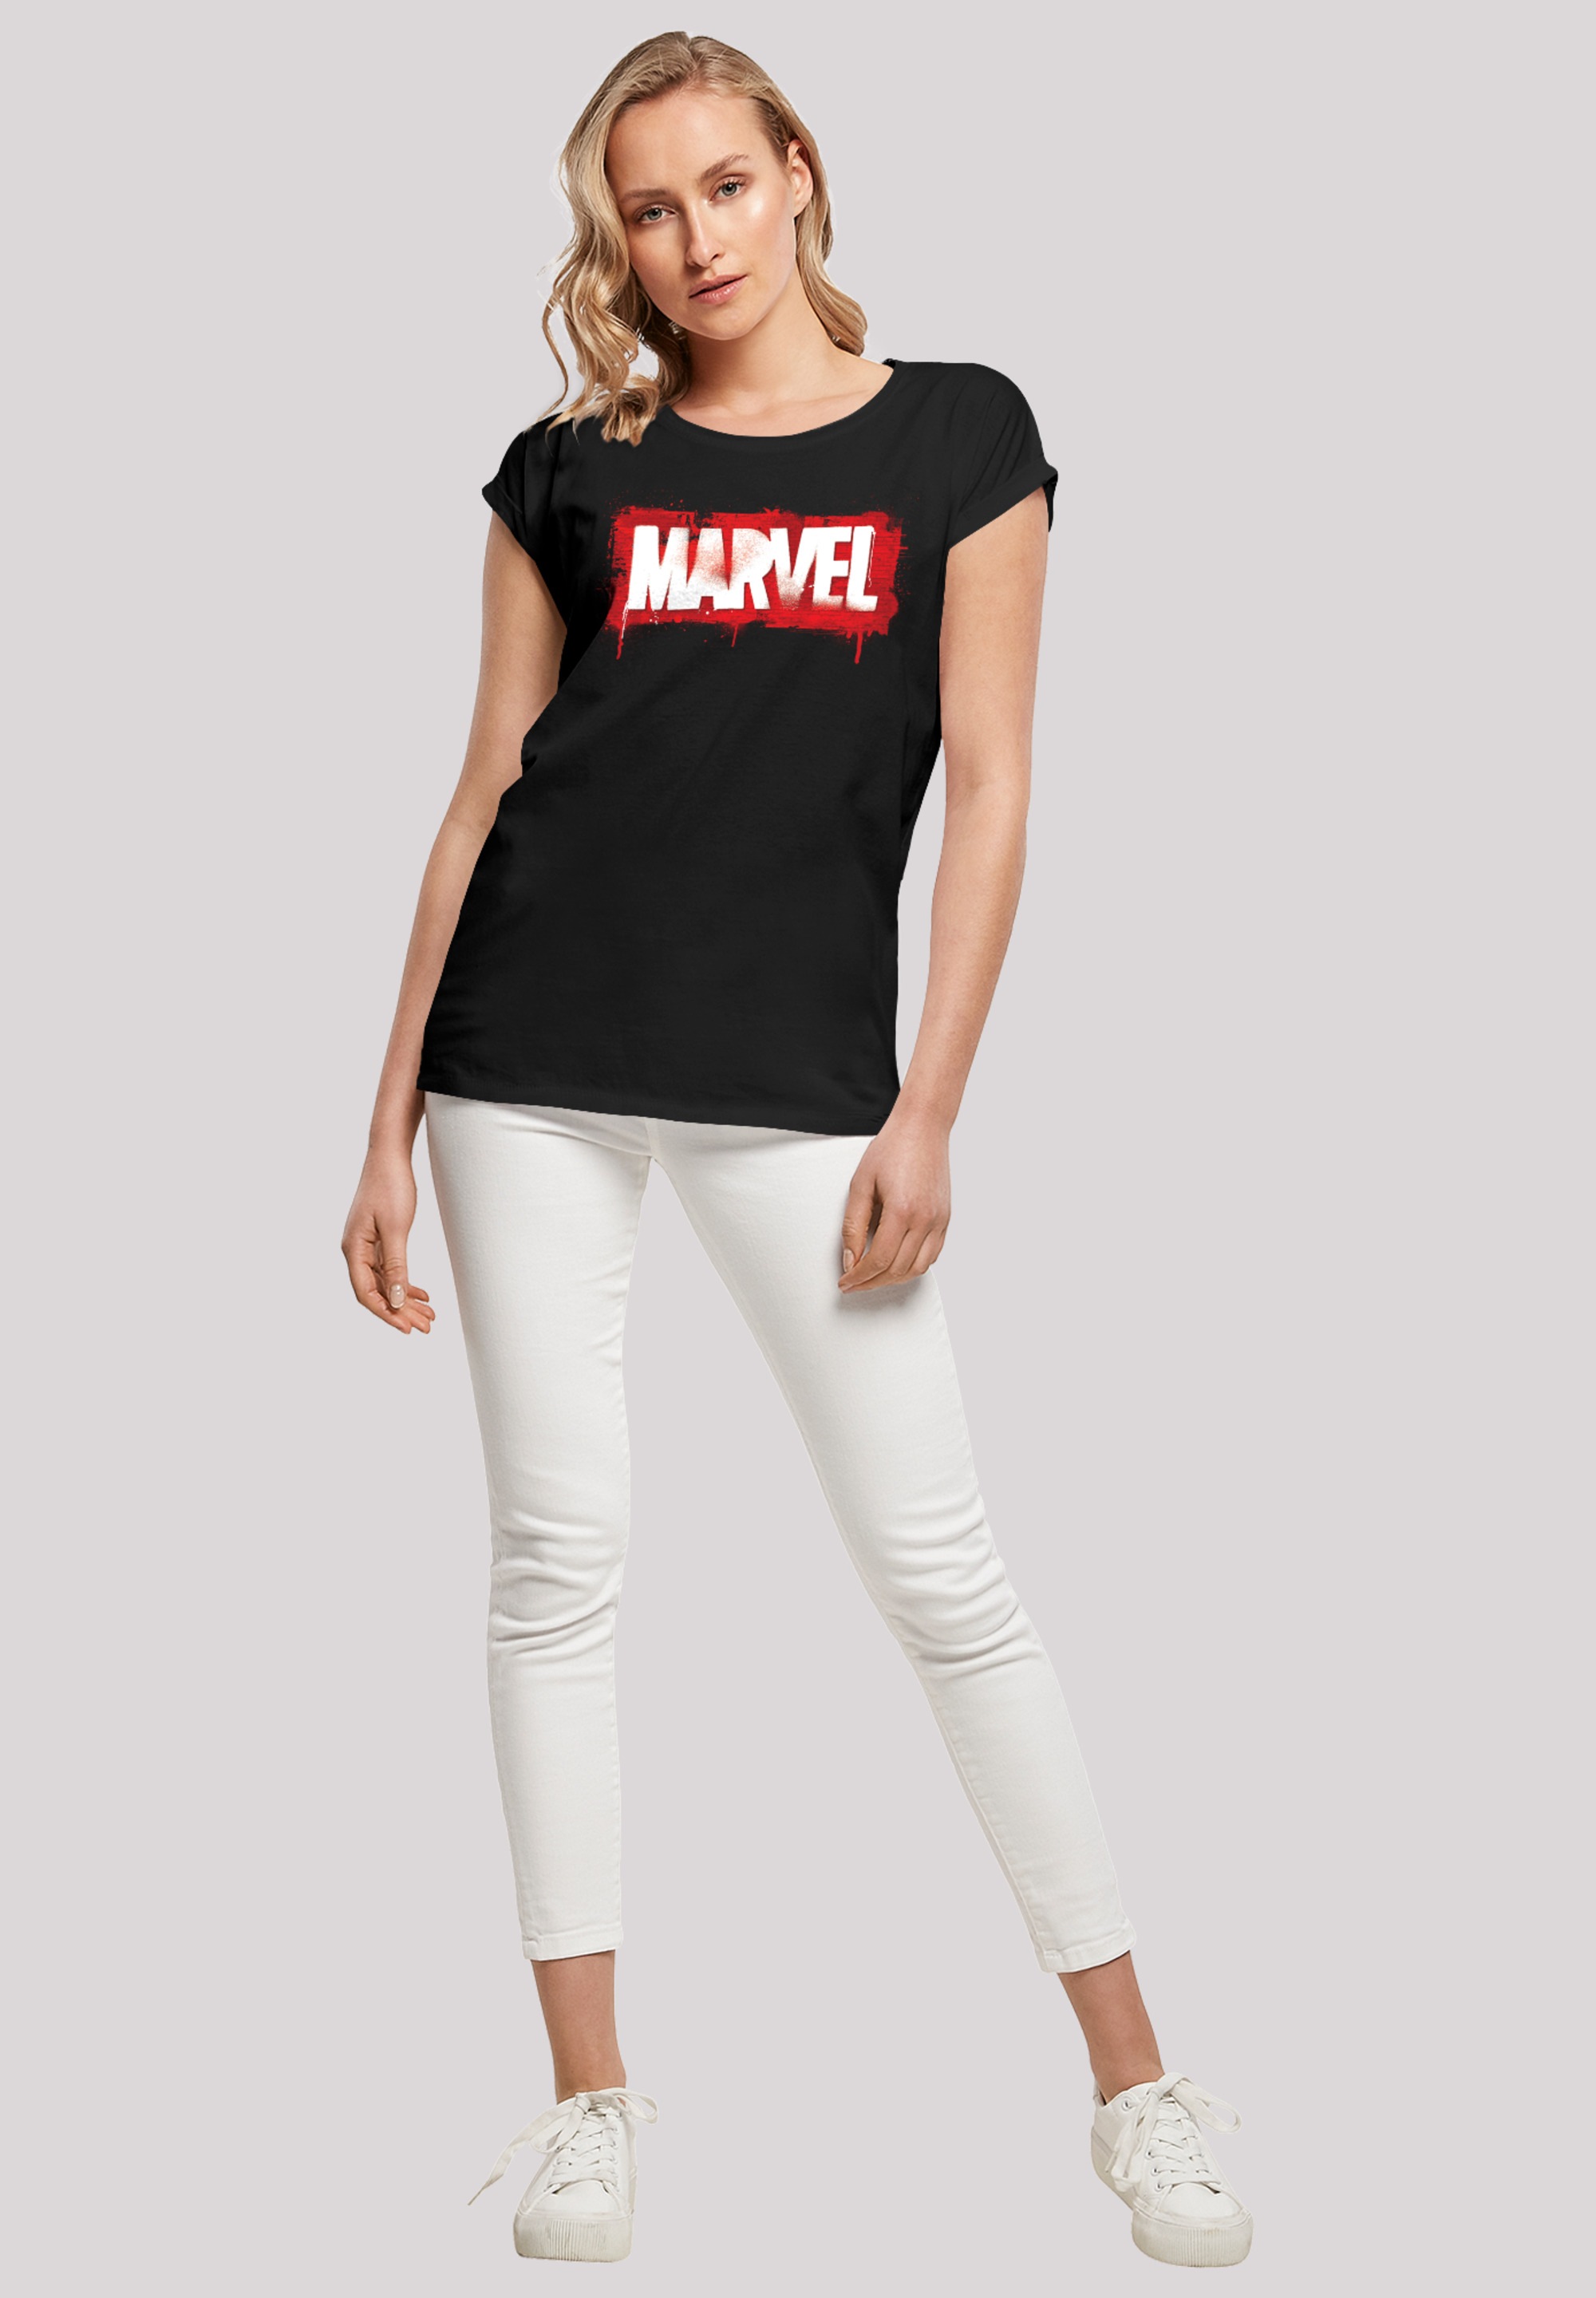 Tee«, Logo Ladies F4NT4STIC BAUR Shoulder Kurzarmshirt »Damen | Marvel Extended (1 Spray bestellen tlg.) with